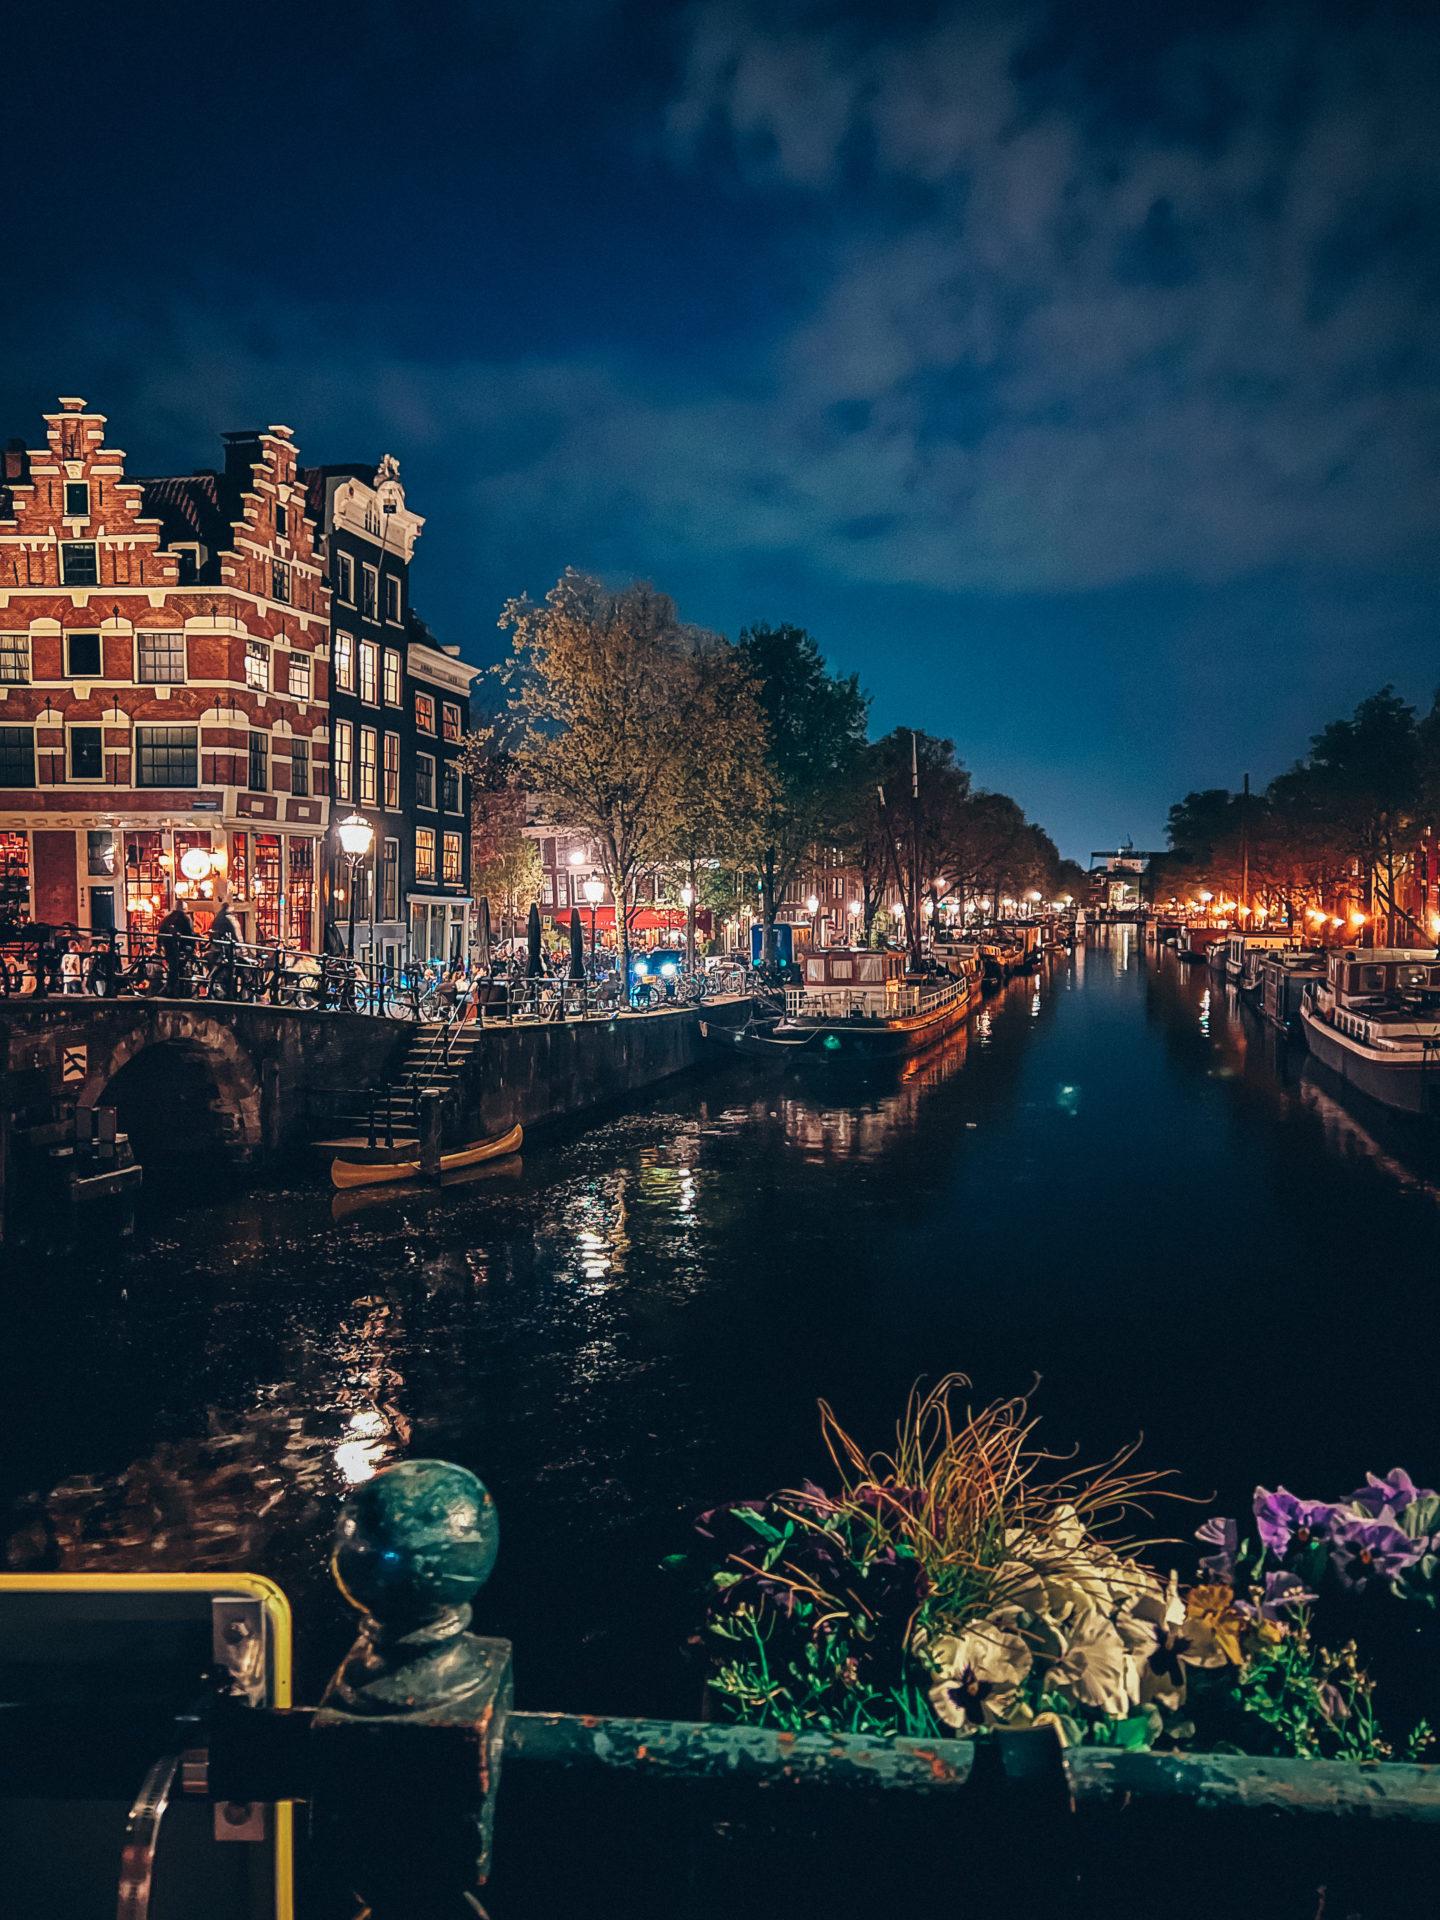 Amsterdam lights at night